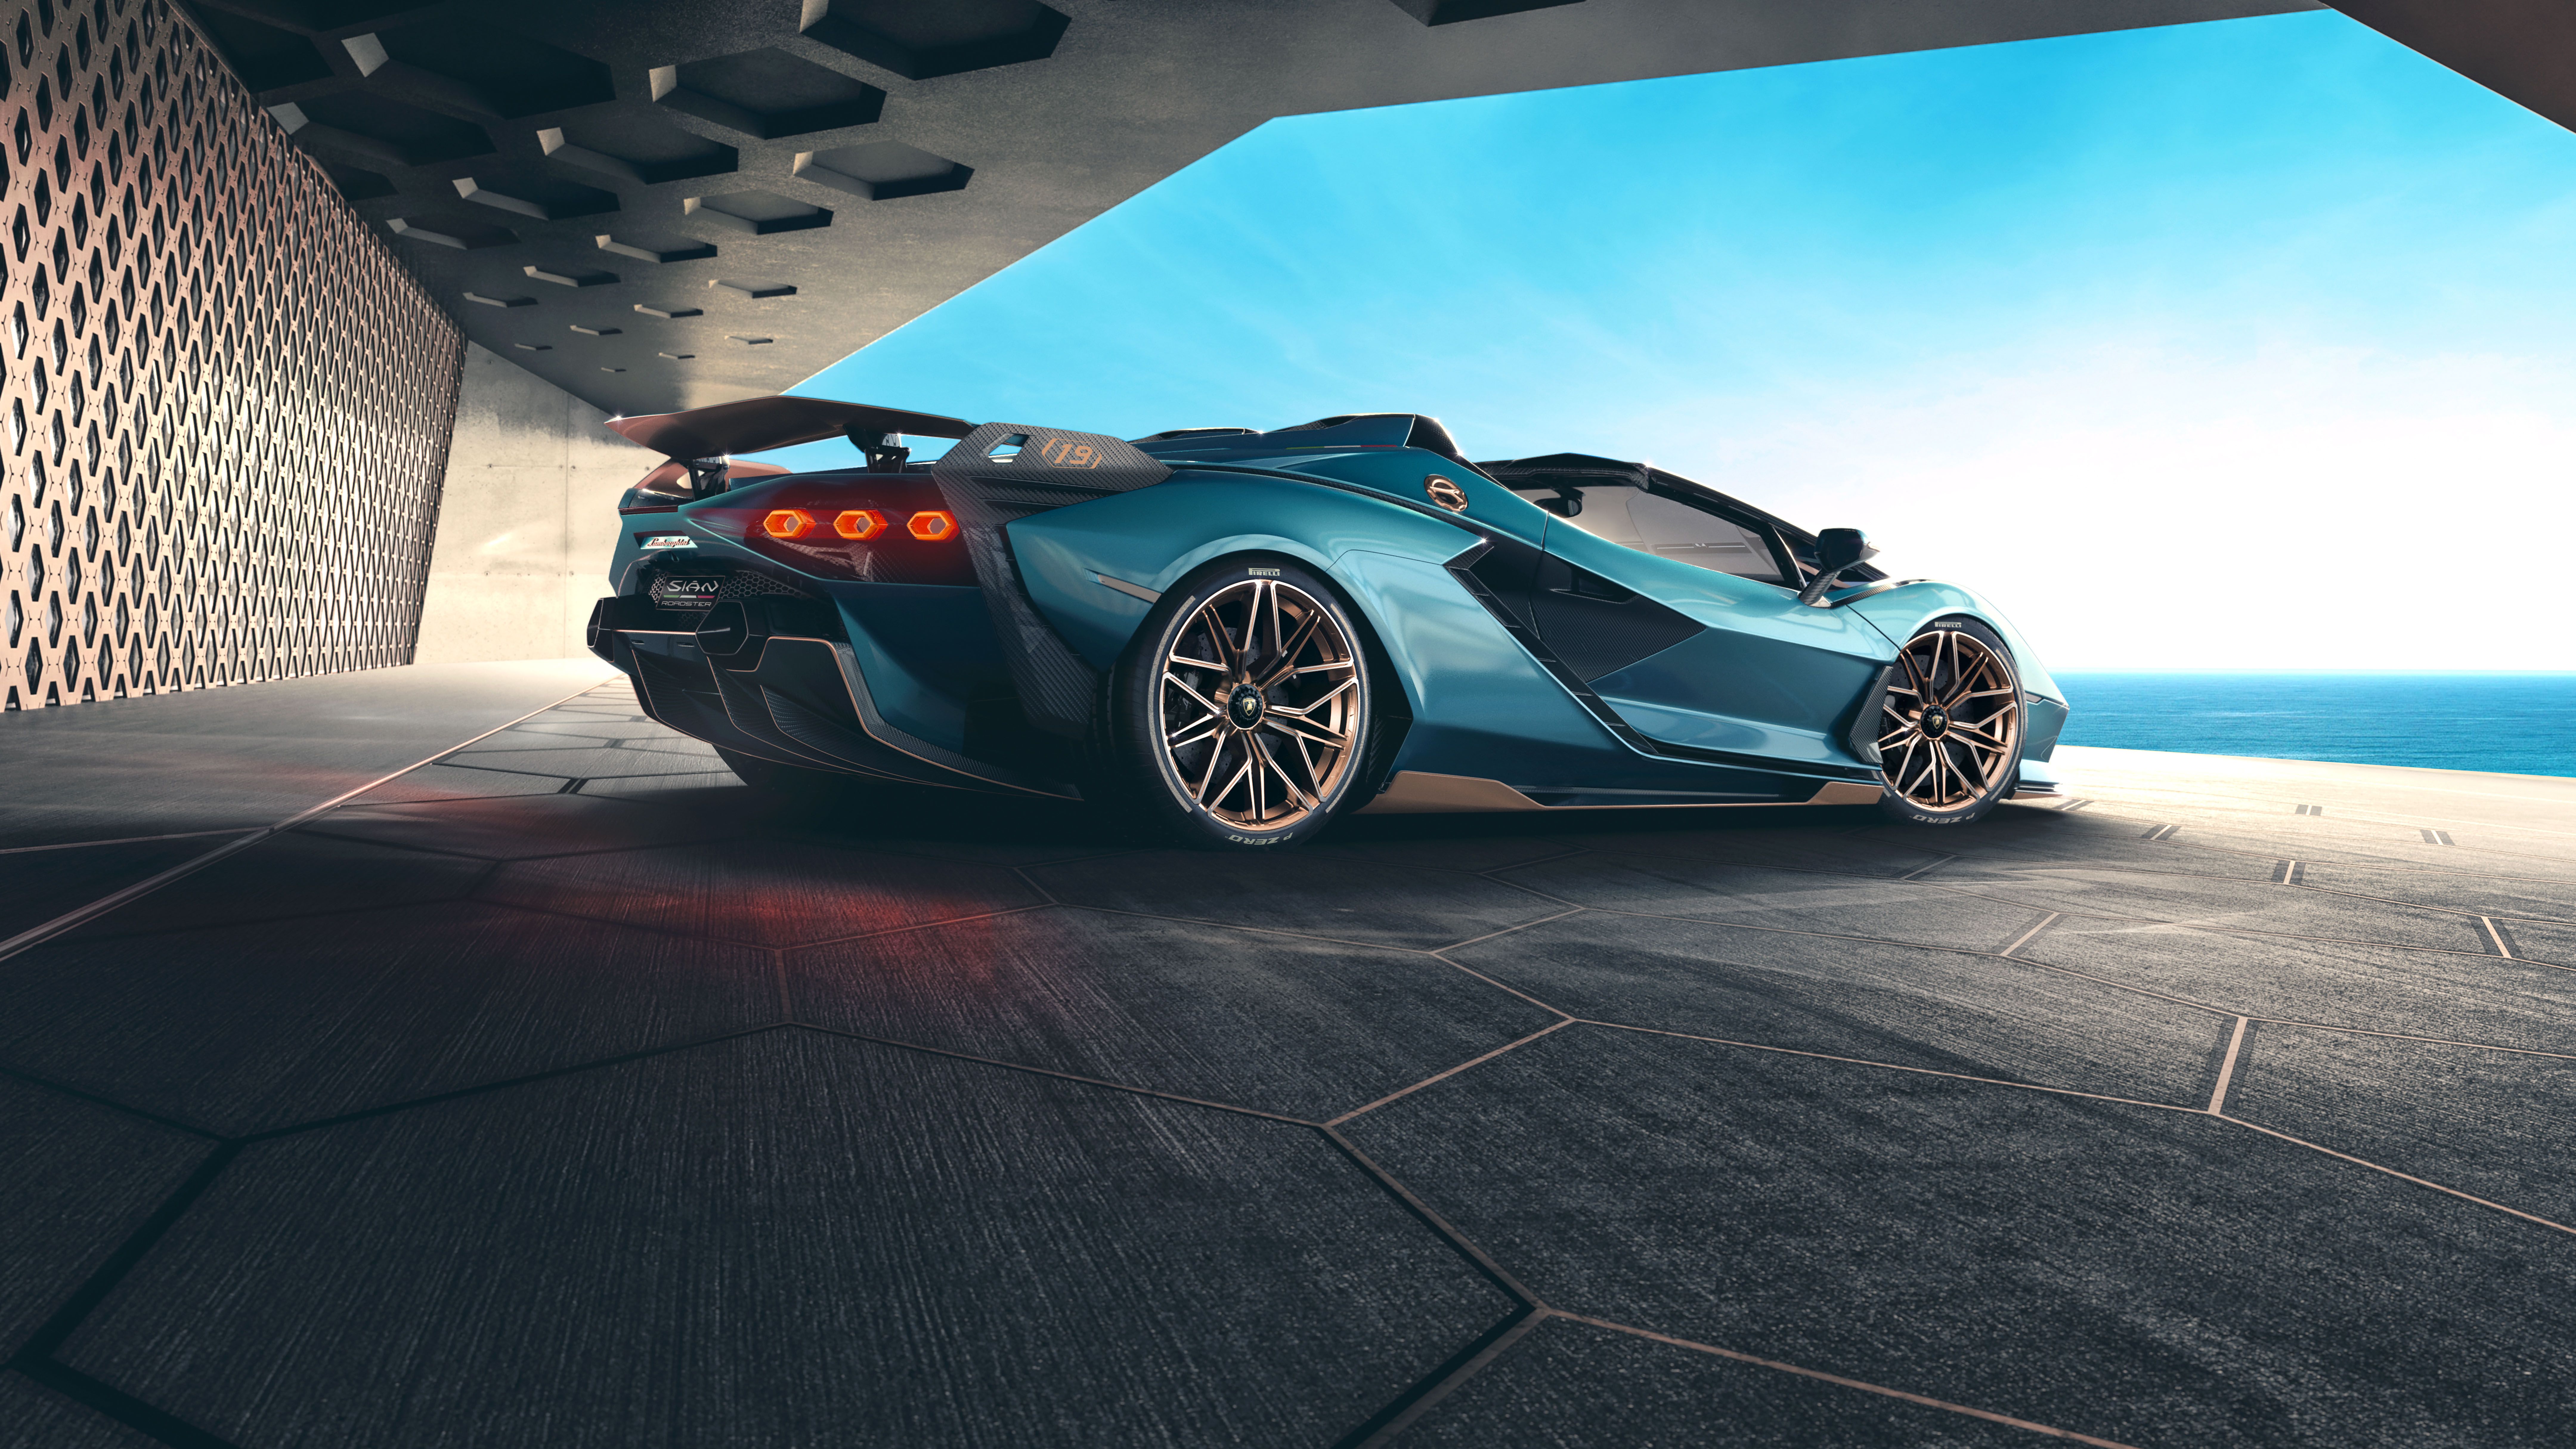 Lamborghini Sian Roadster 2020 Car, HD Cars, 4k Wallpaper, Image, Background, Photo and Picture